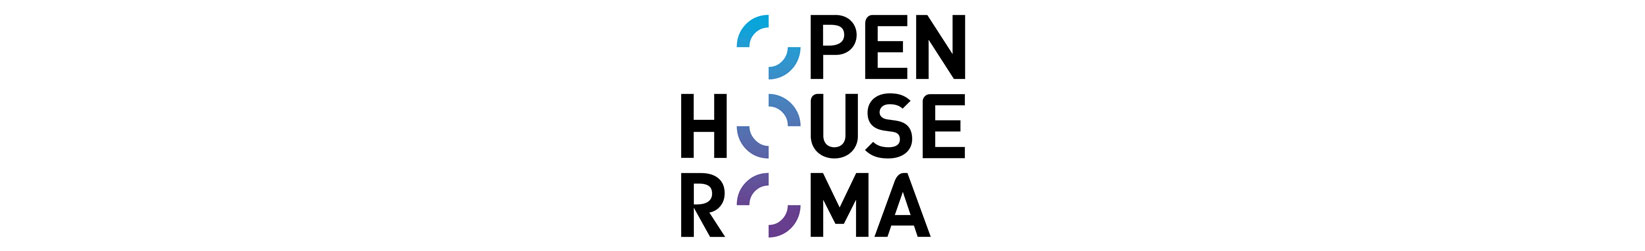 open house roma